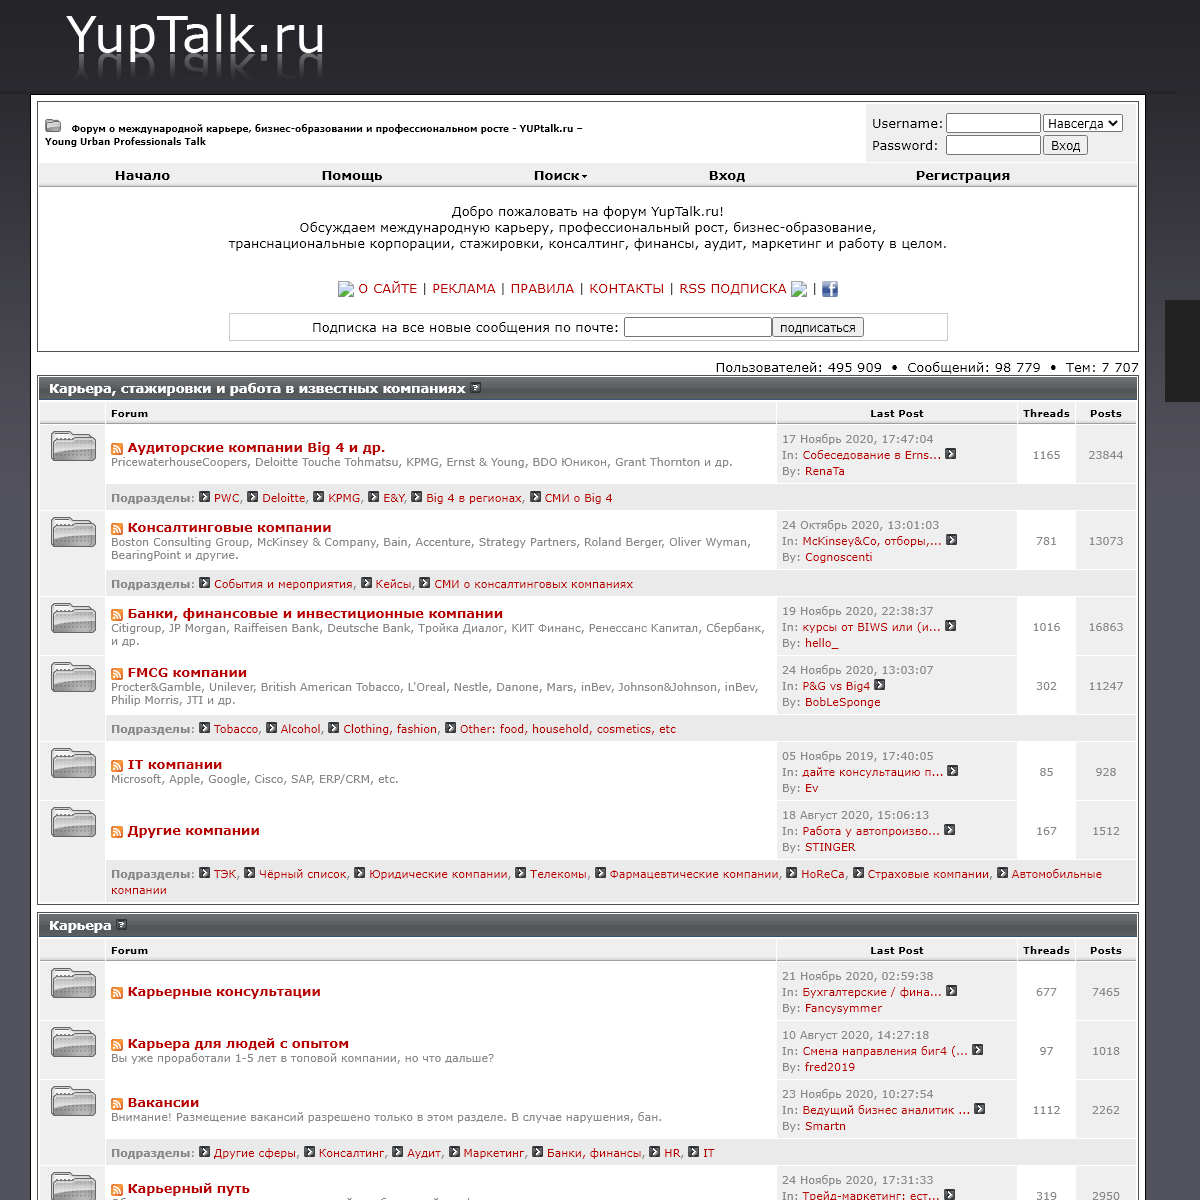 A complete backup of yuptalk.ru